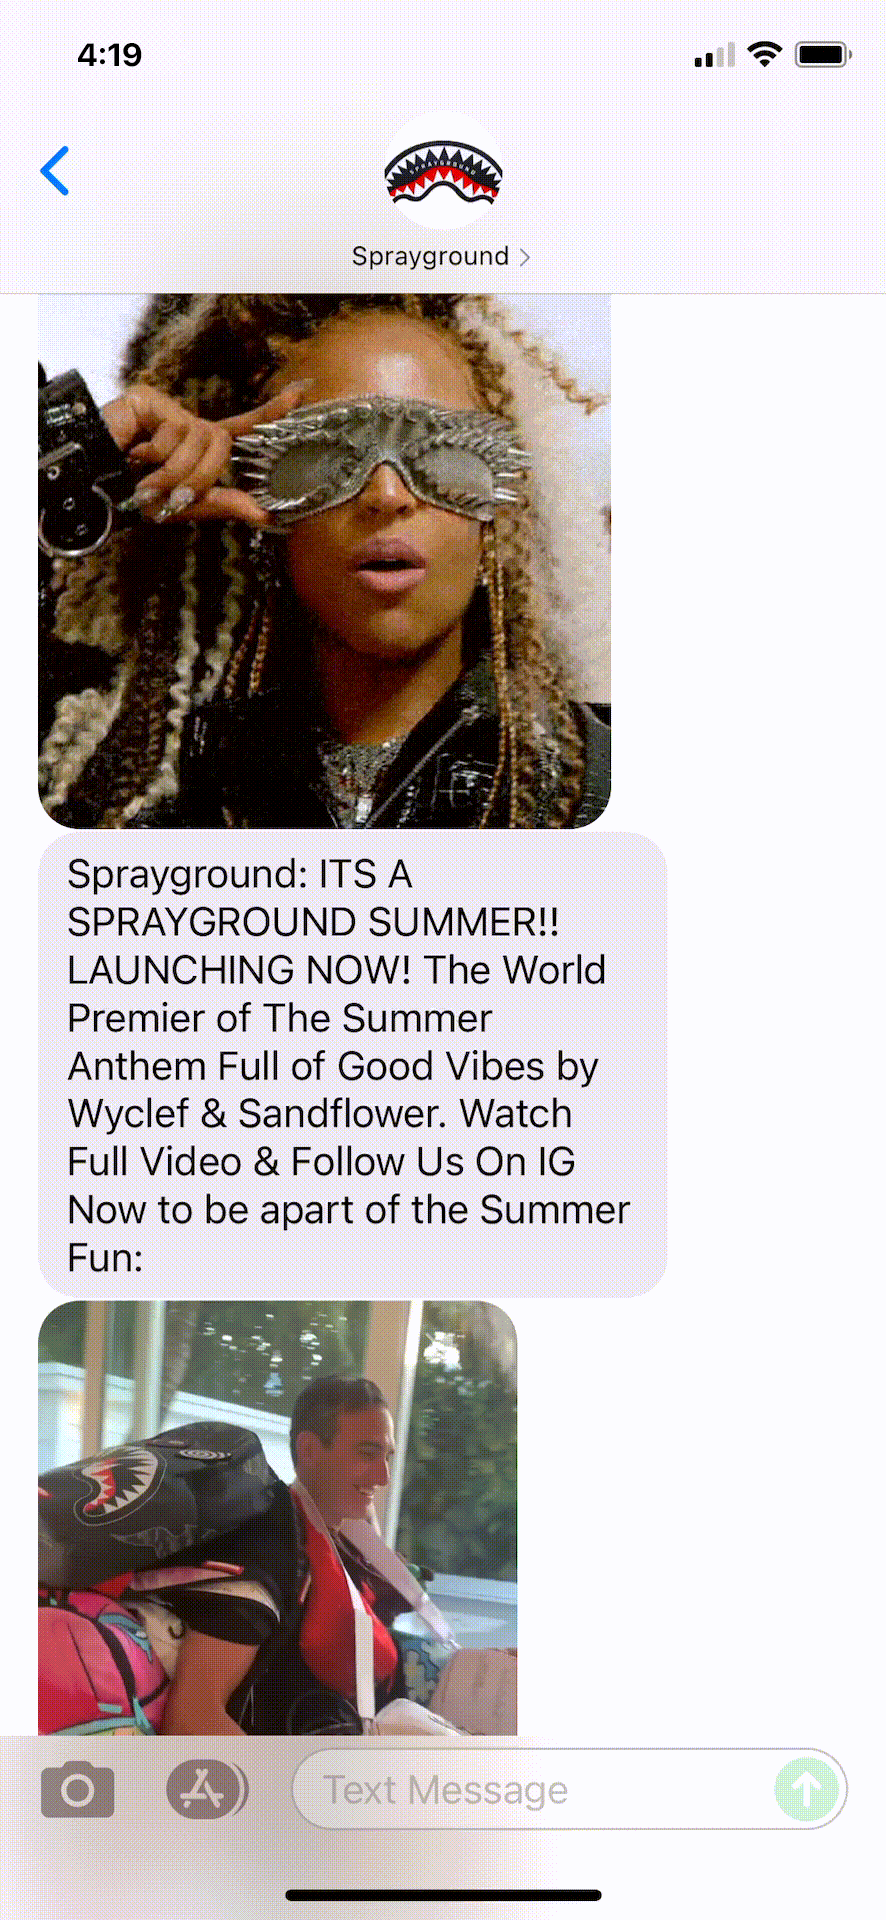 Sprayground-Text-Message-Marketing-Example-08.05.2021